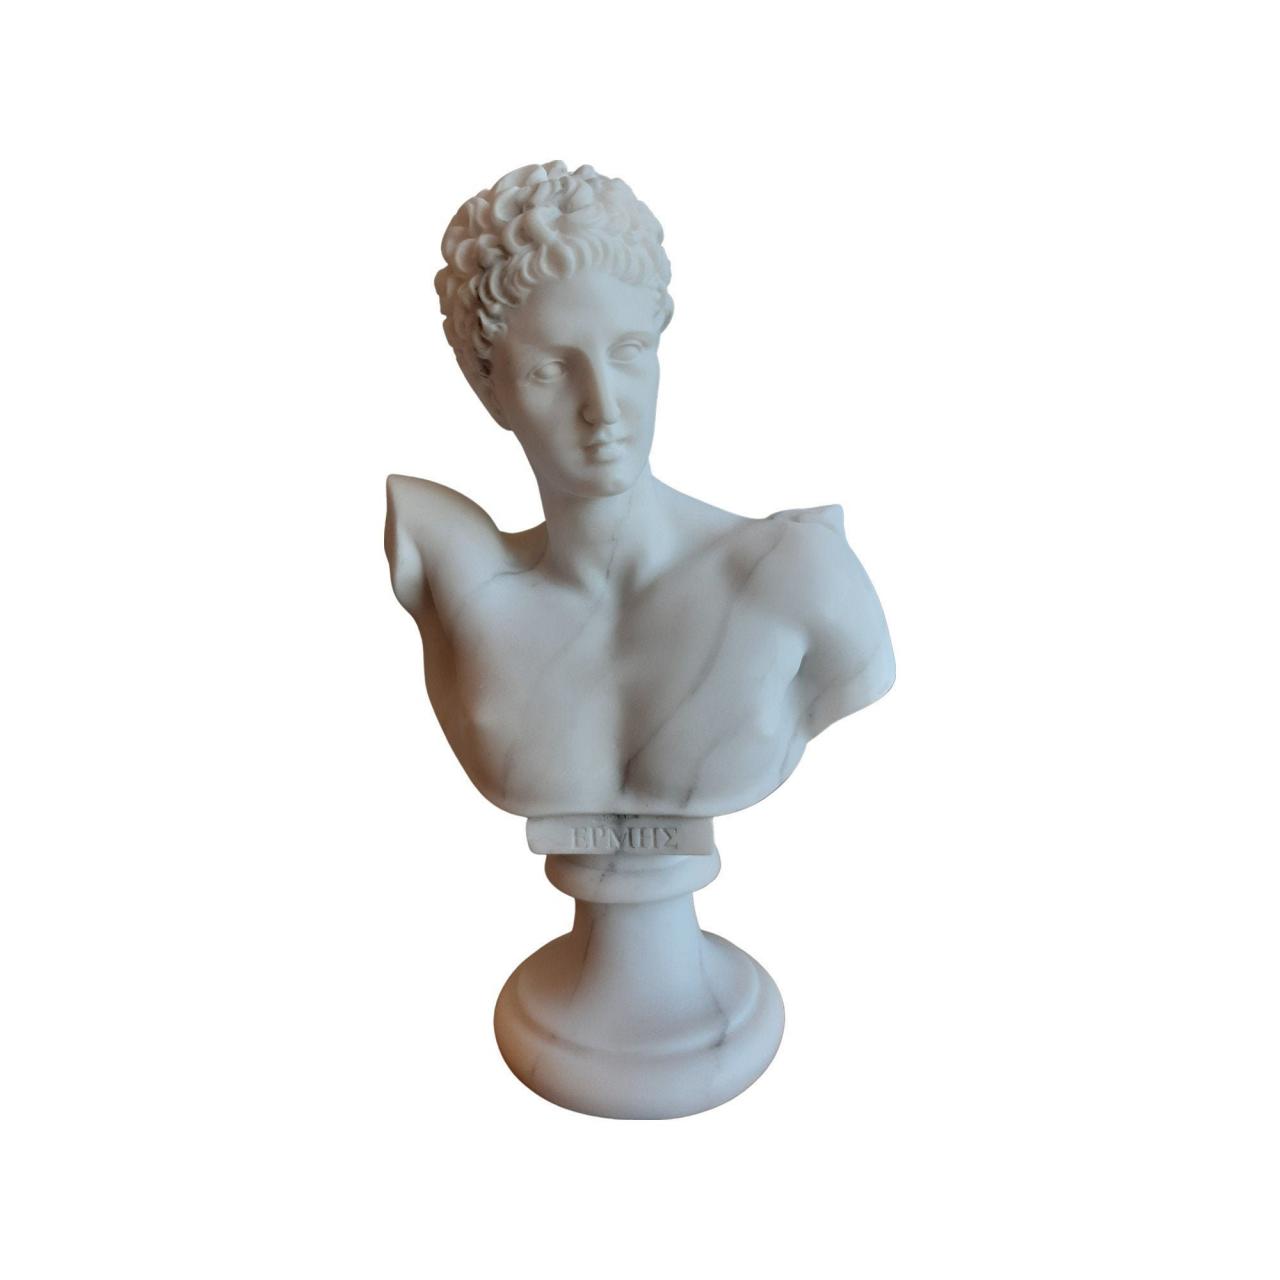 Hermes Statue Greek Roman God Bust Sculpture Handmade Marble Finish 21cm